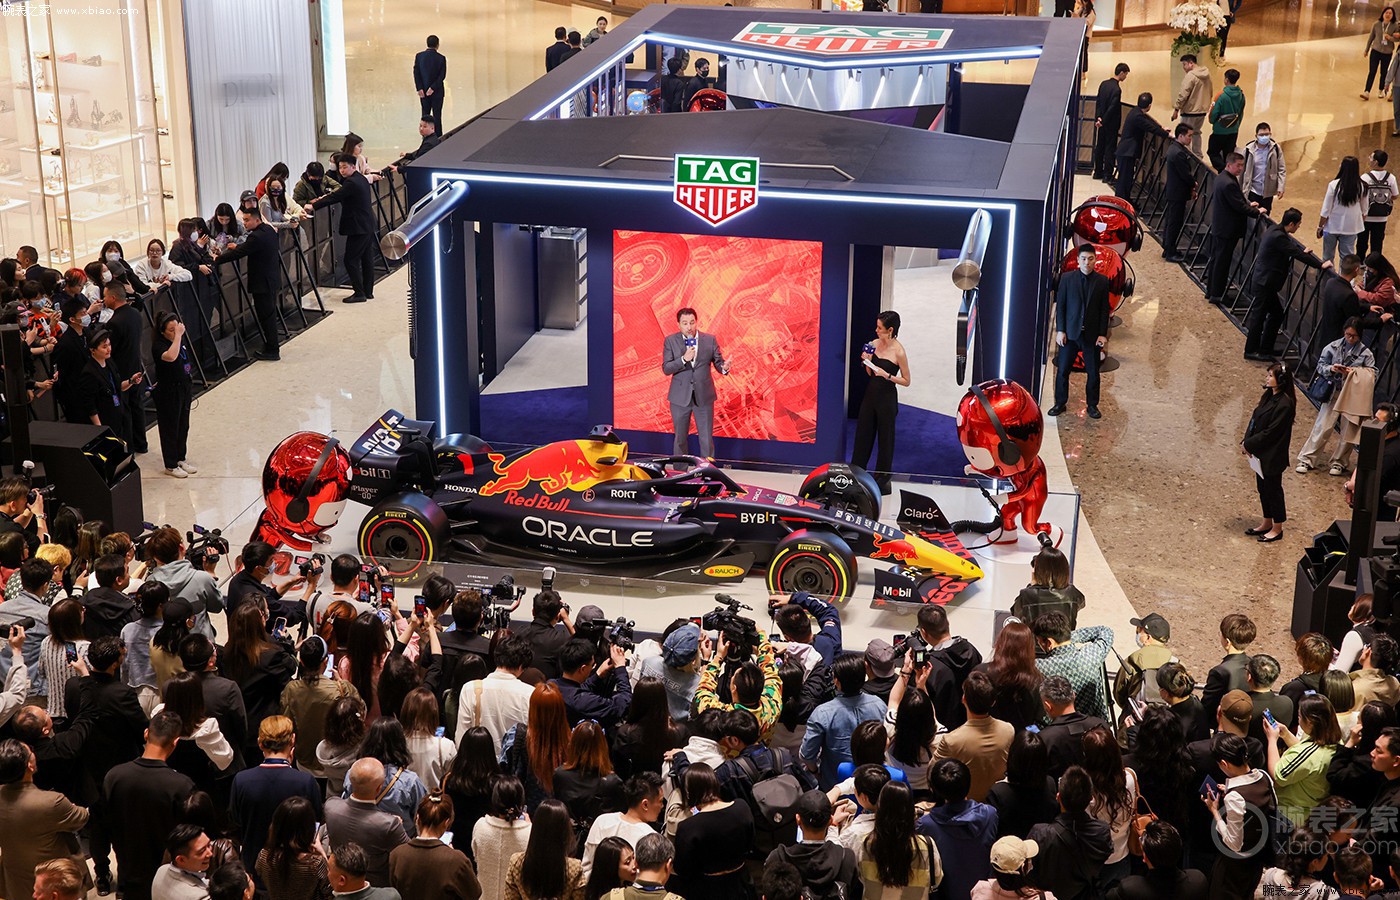 tag heuer泰格豪雅携众星于上海举办庆典活动 燃情致敬品牌竞速基因与